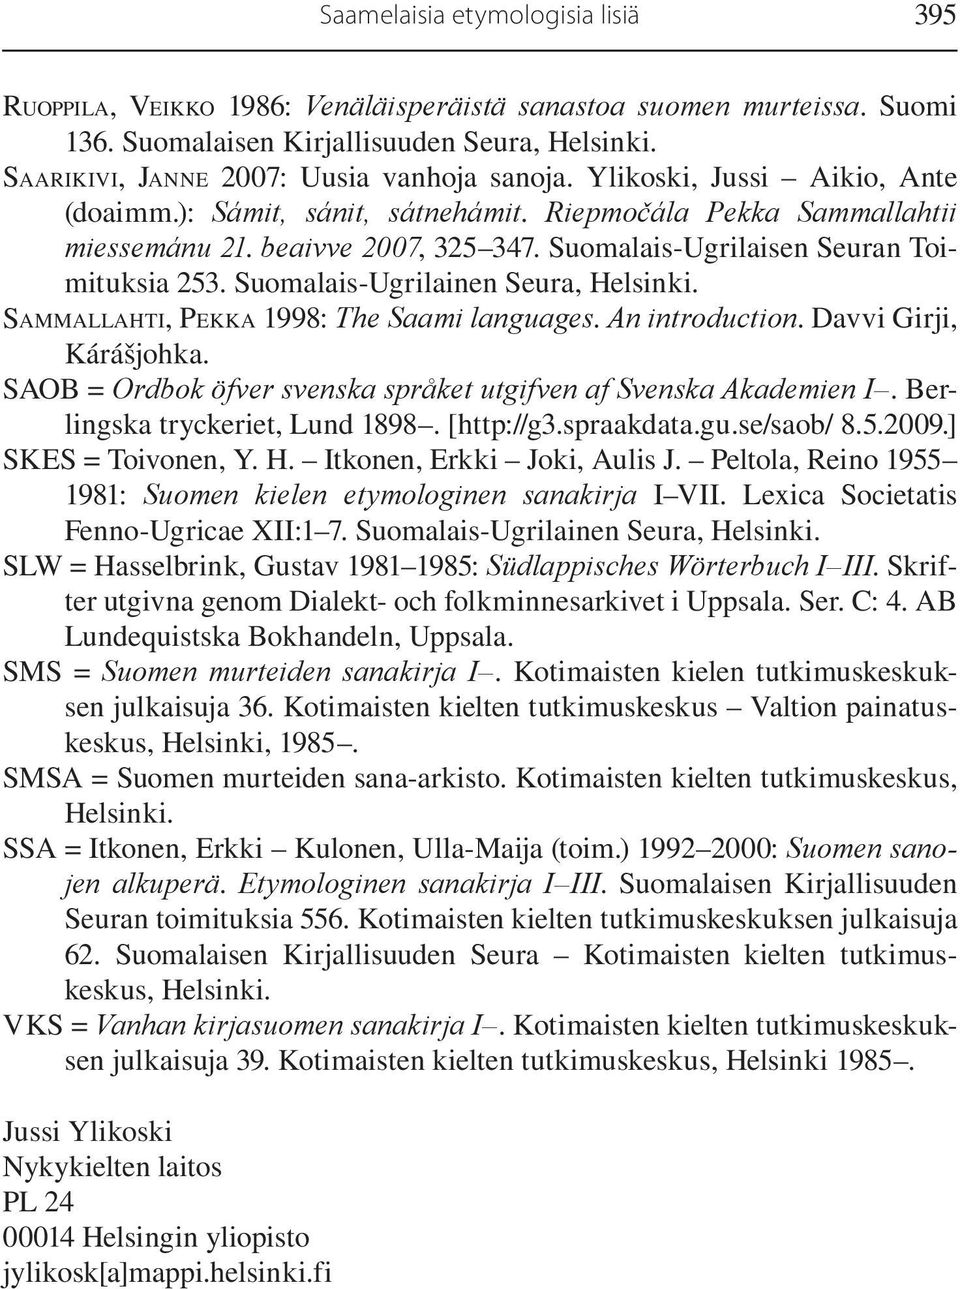 Suomalais-Ugrilaisen Seuran Toimituksia 253. Suomalais-Ugrilainen Seura, Helsinki. SAMMALLAHTI, PEKKA 1998: The Saami languages. An introduction. Davvi Girji, Kárášjohka.